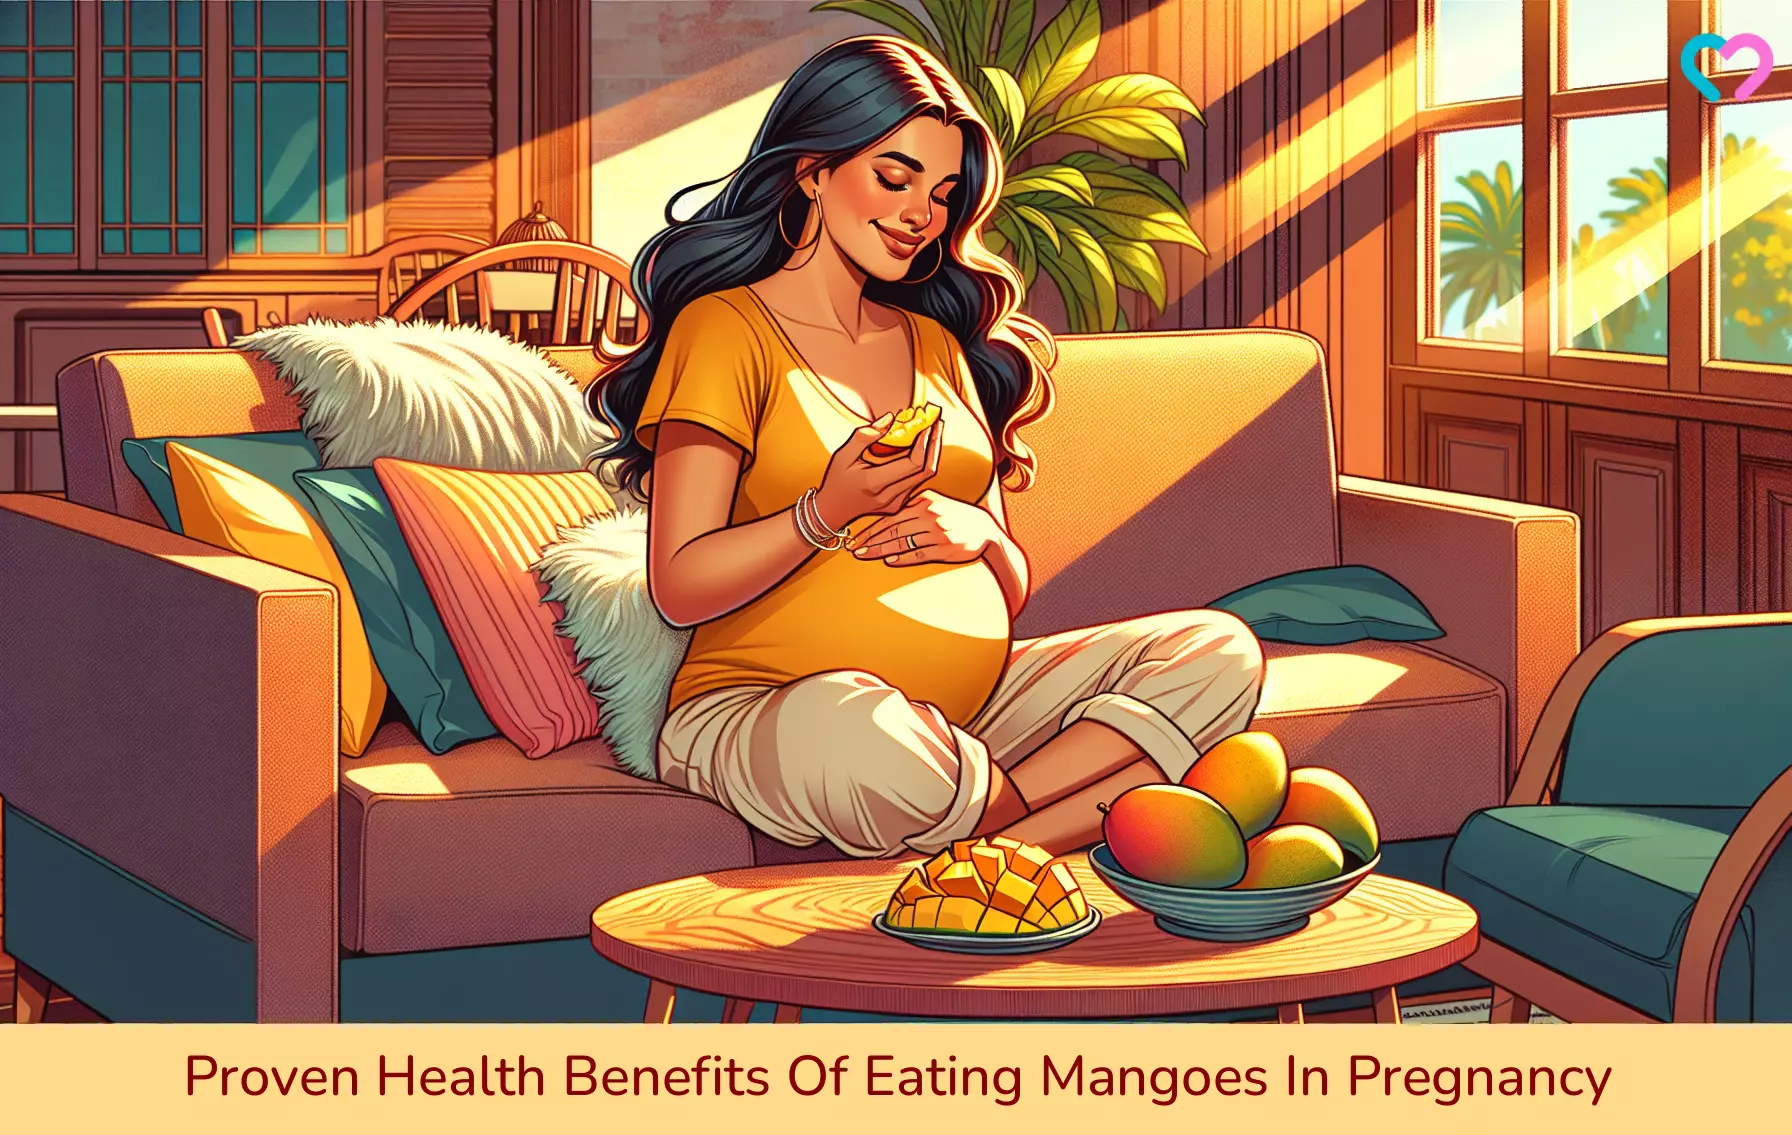 Eating Mangoes In Pregnancy_illustration